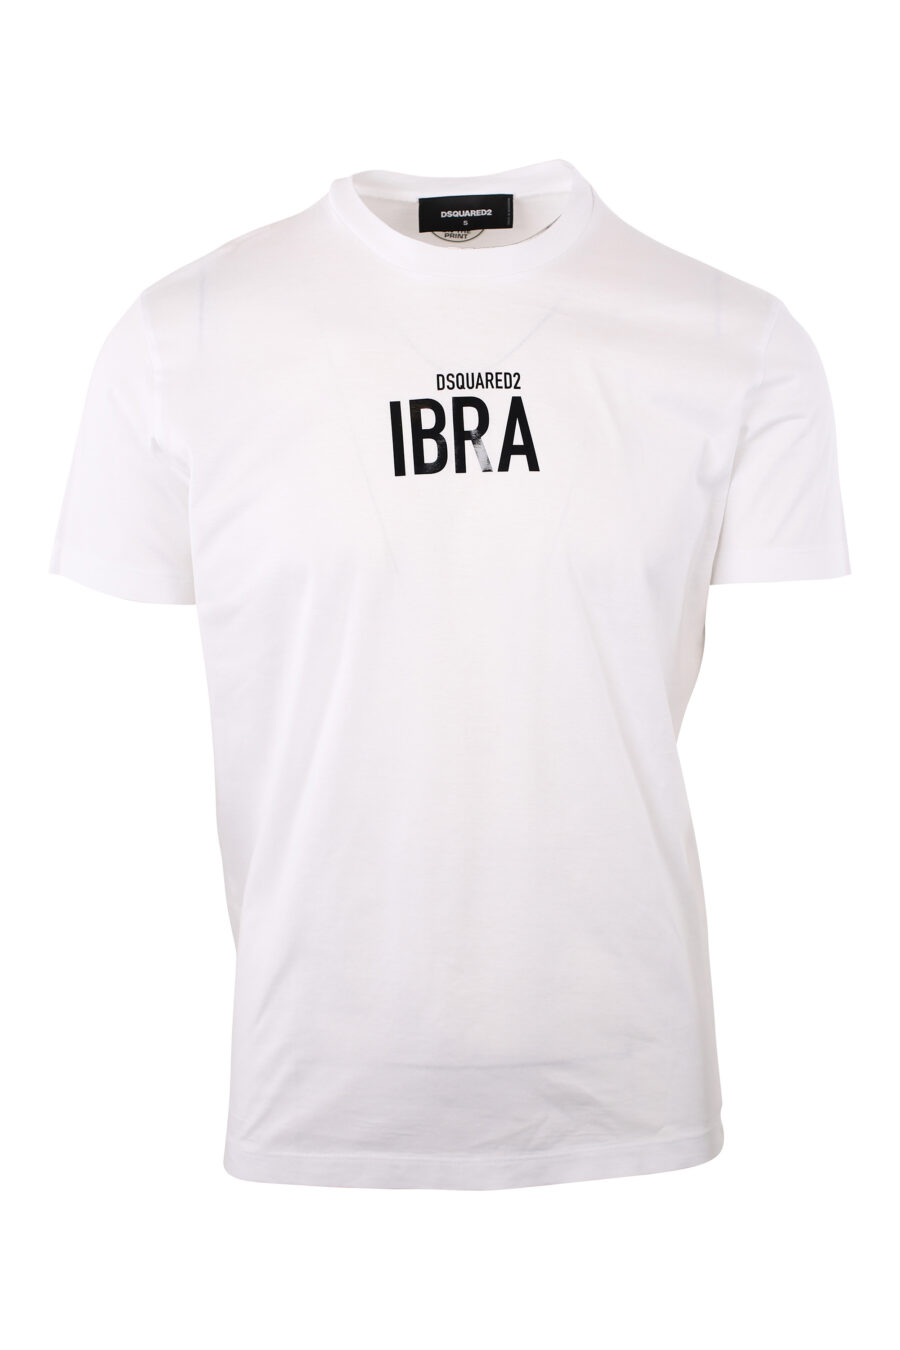 Camiseta blanca con logo "ibra" negro - IMG 2001